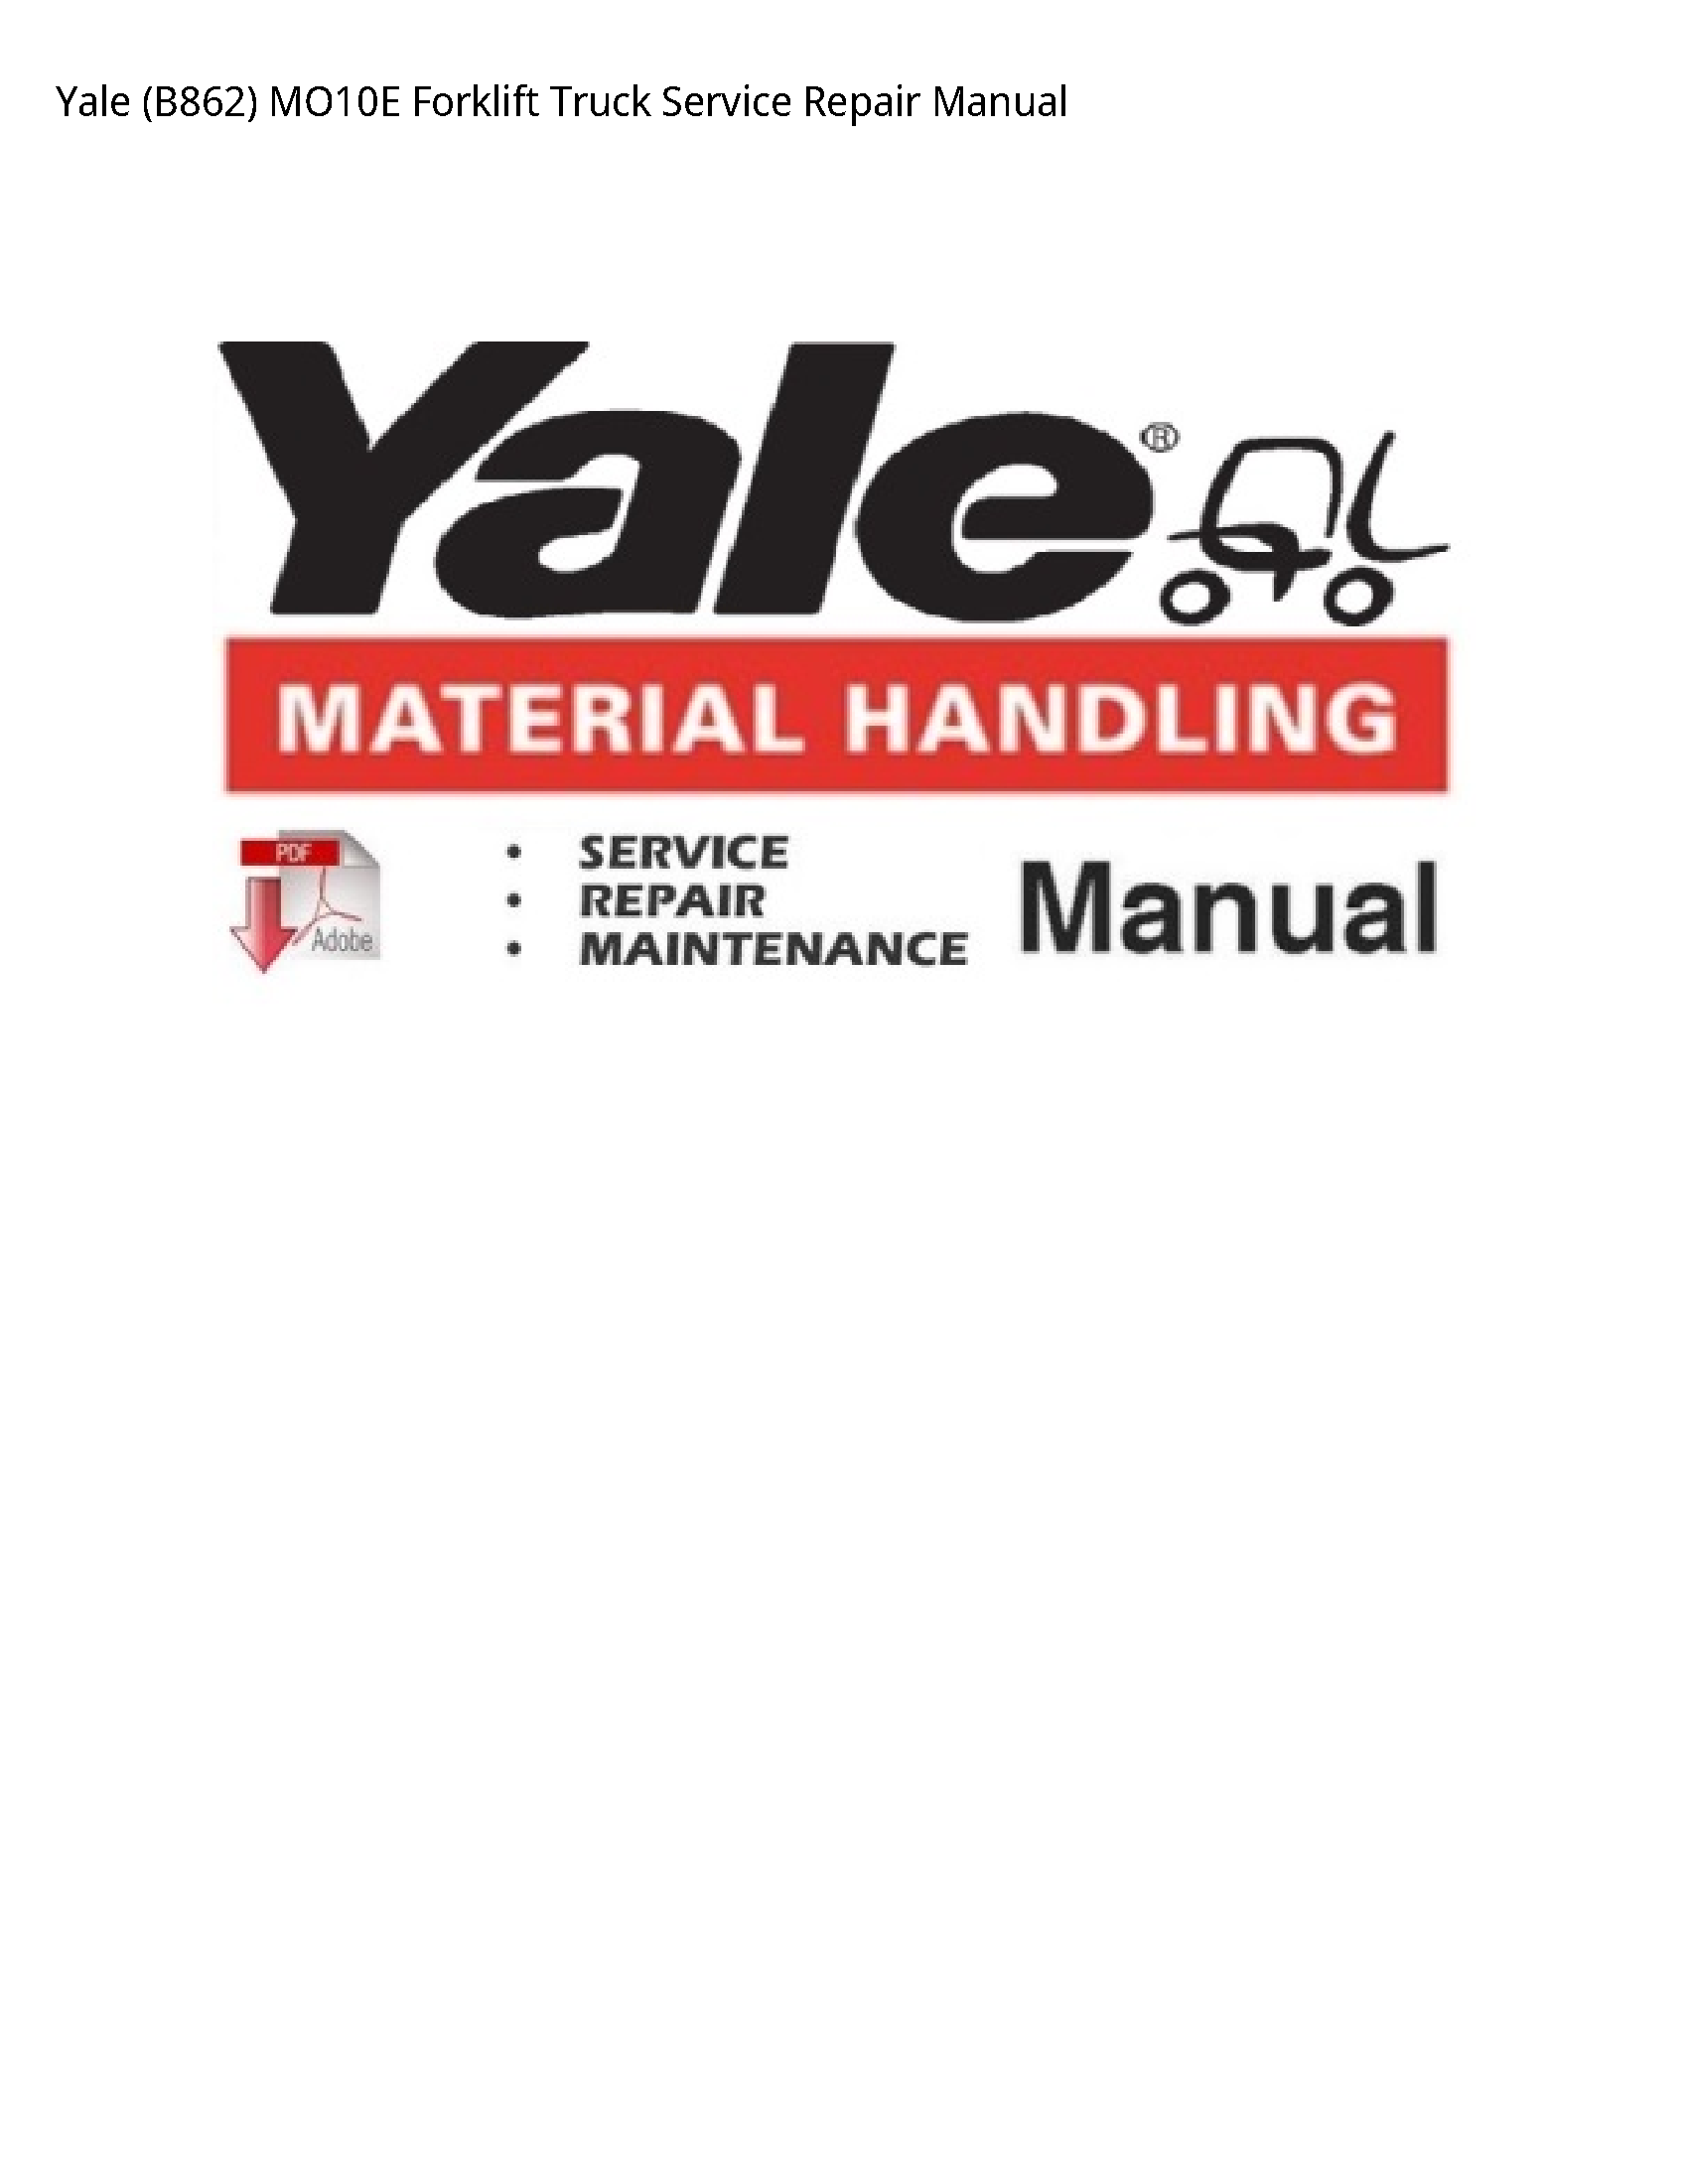 Yale (B862) Forklift Truck manual